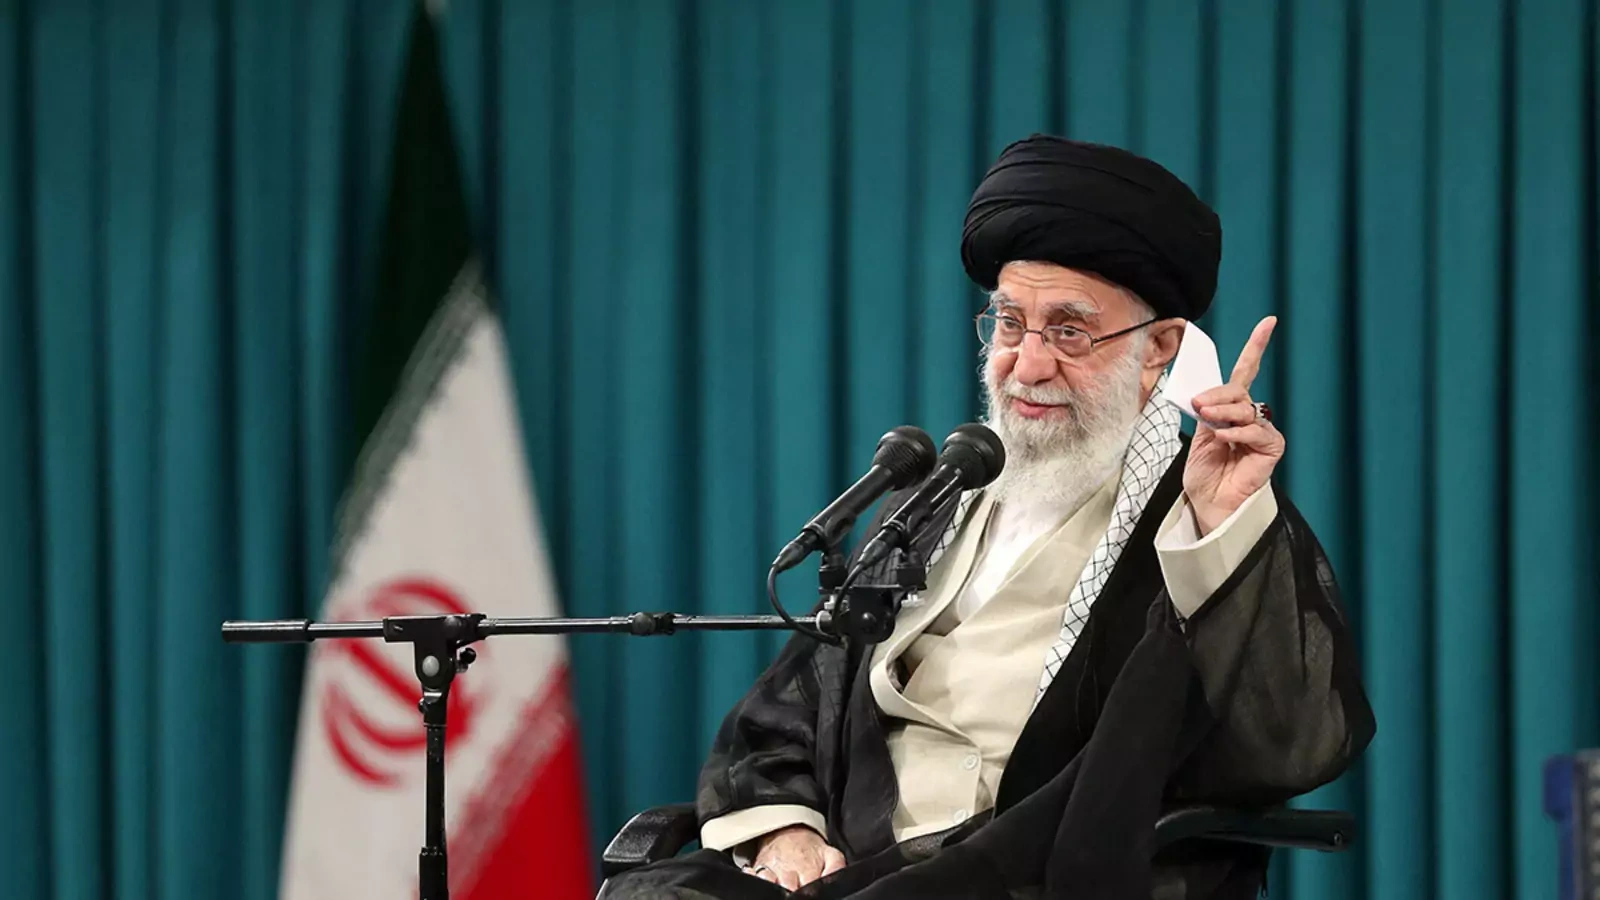 Iran’s supreme leader, Ayatollah Ali Khamenei, speaks during a meeting in Tehran.